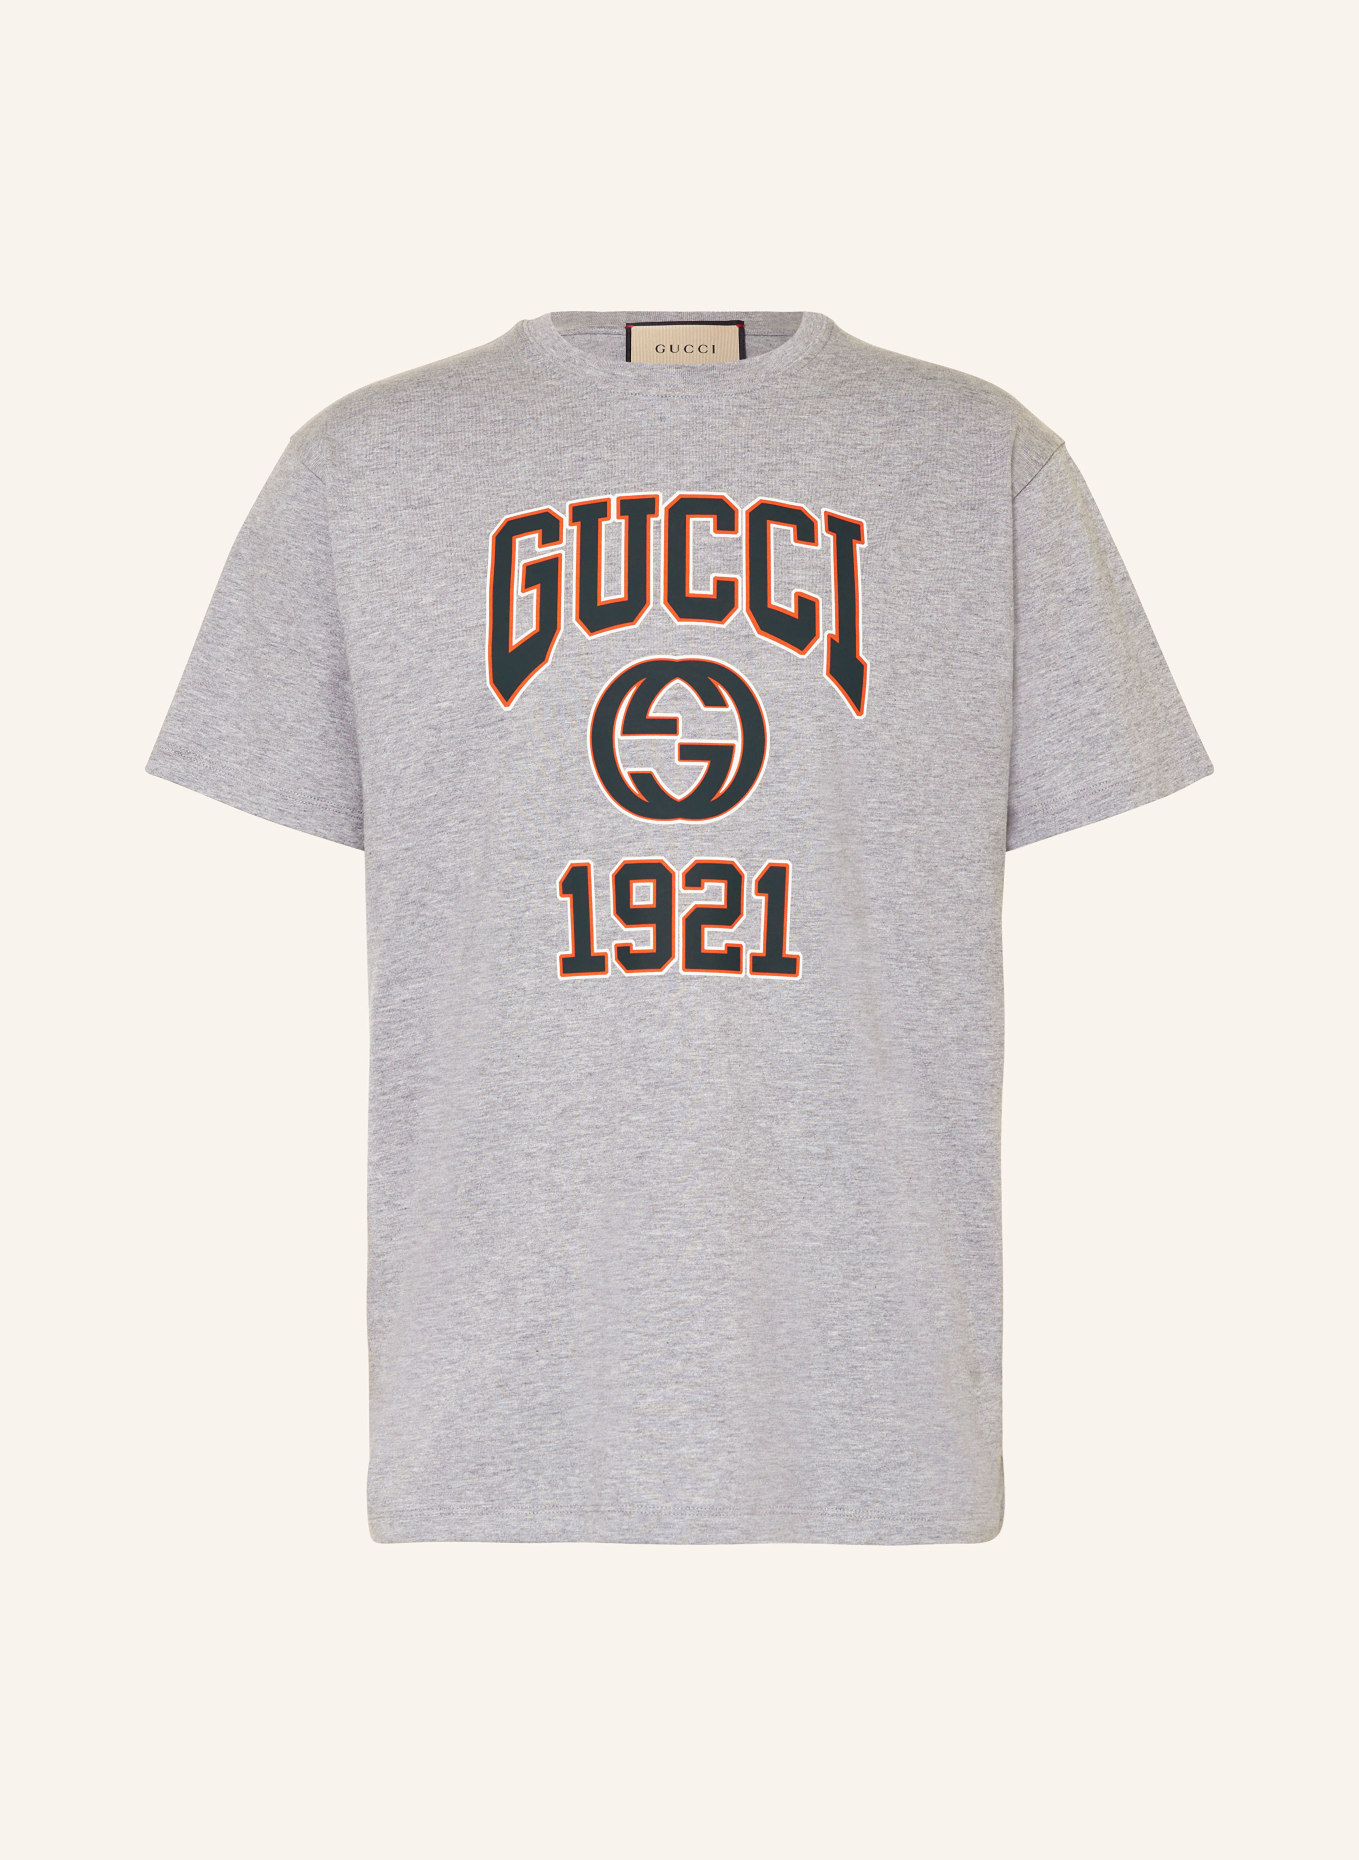 GUCCI T-Shirt, Farbe: GRAU/ DUNKELGRAU/ ORANGE (Bild 1)